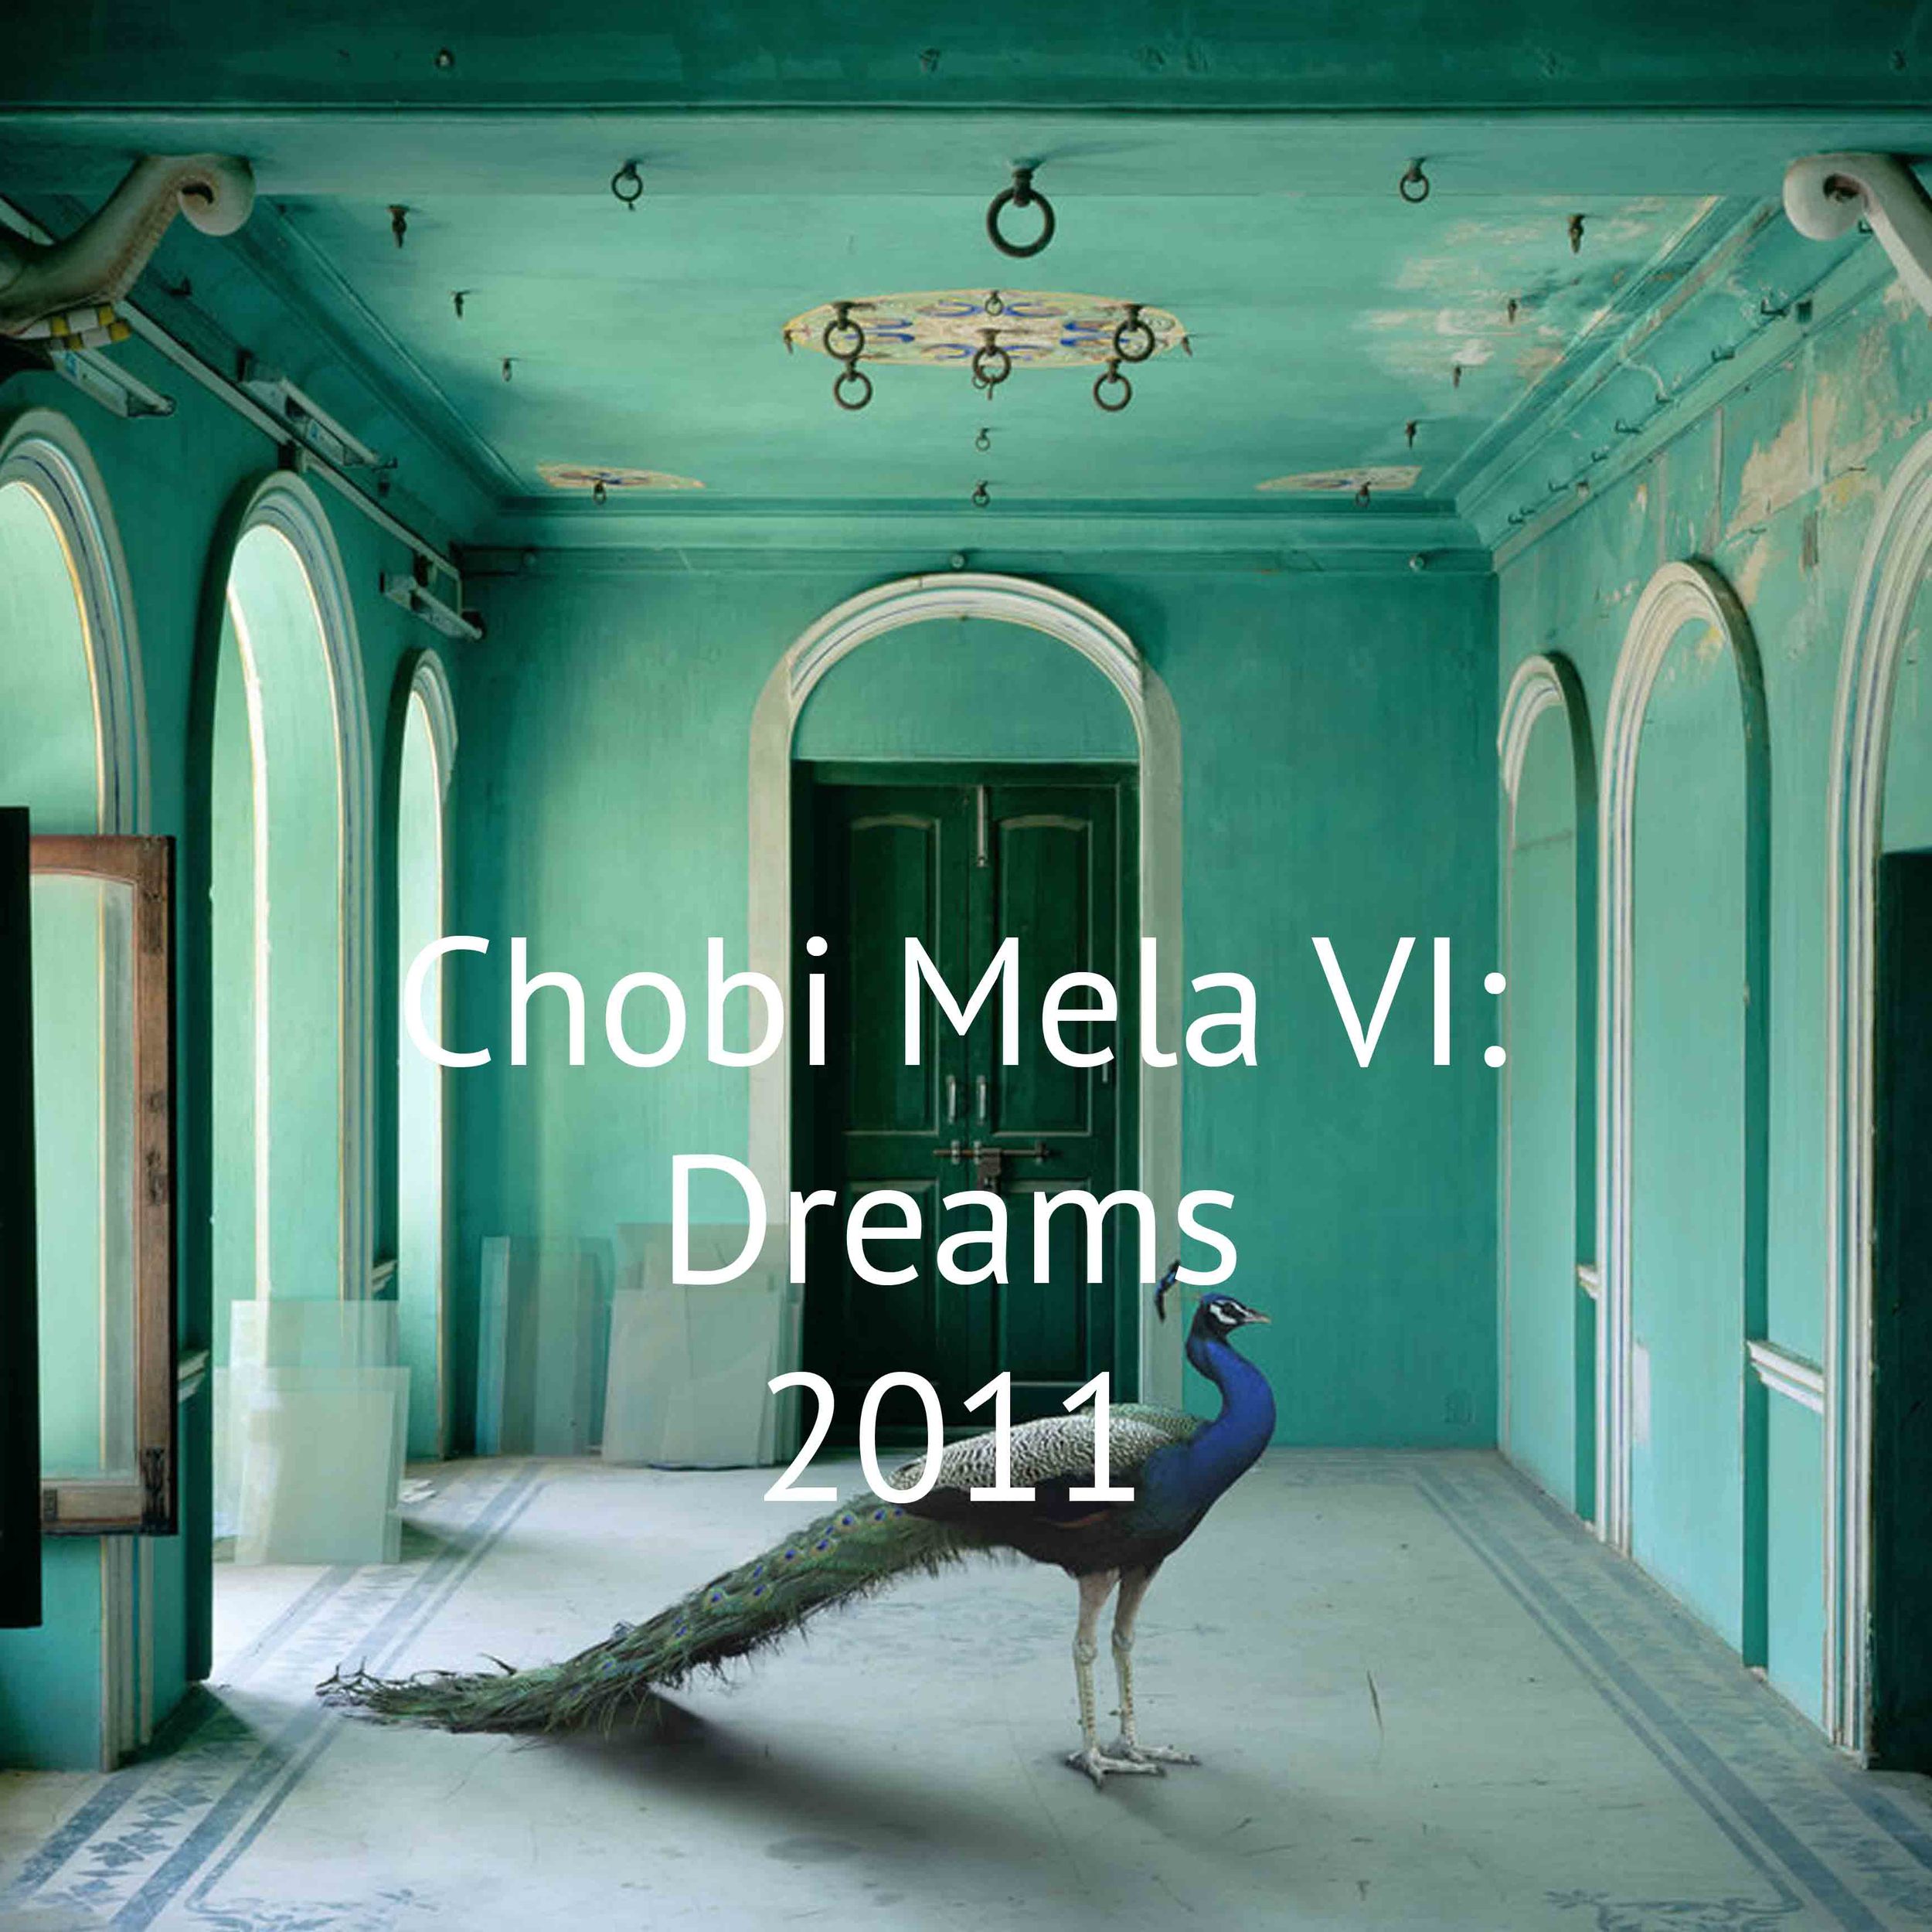 Chobi Mela VI: Dreams